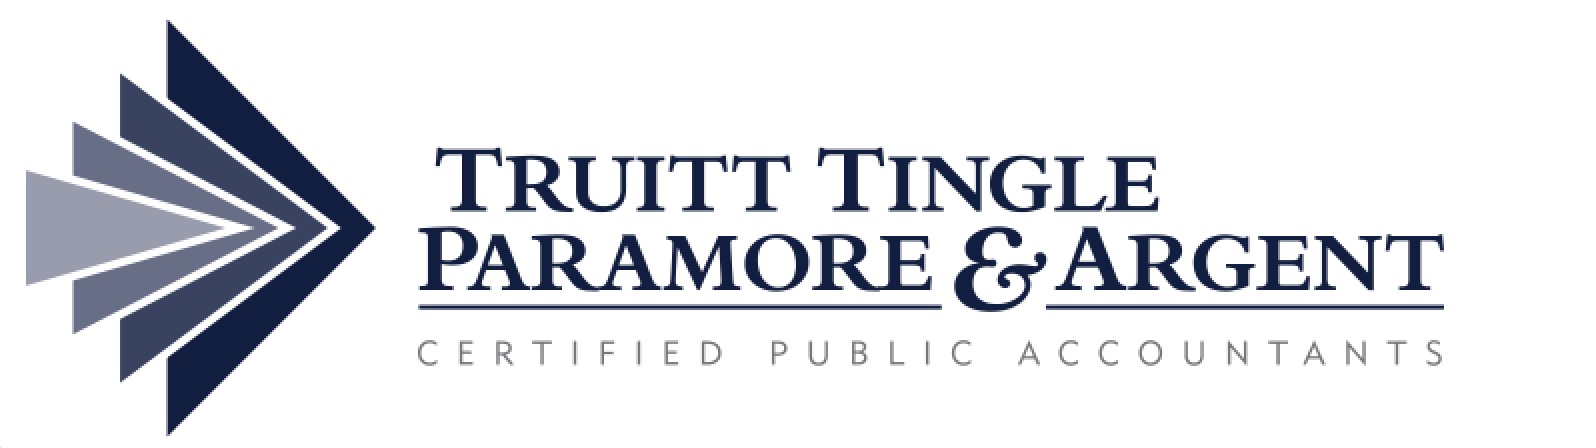 Truitt Tingle Paramore & Argent